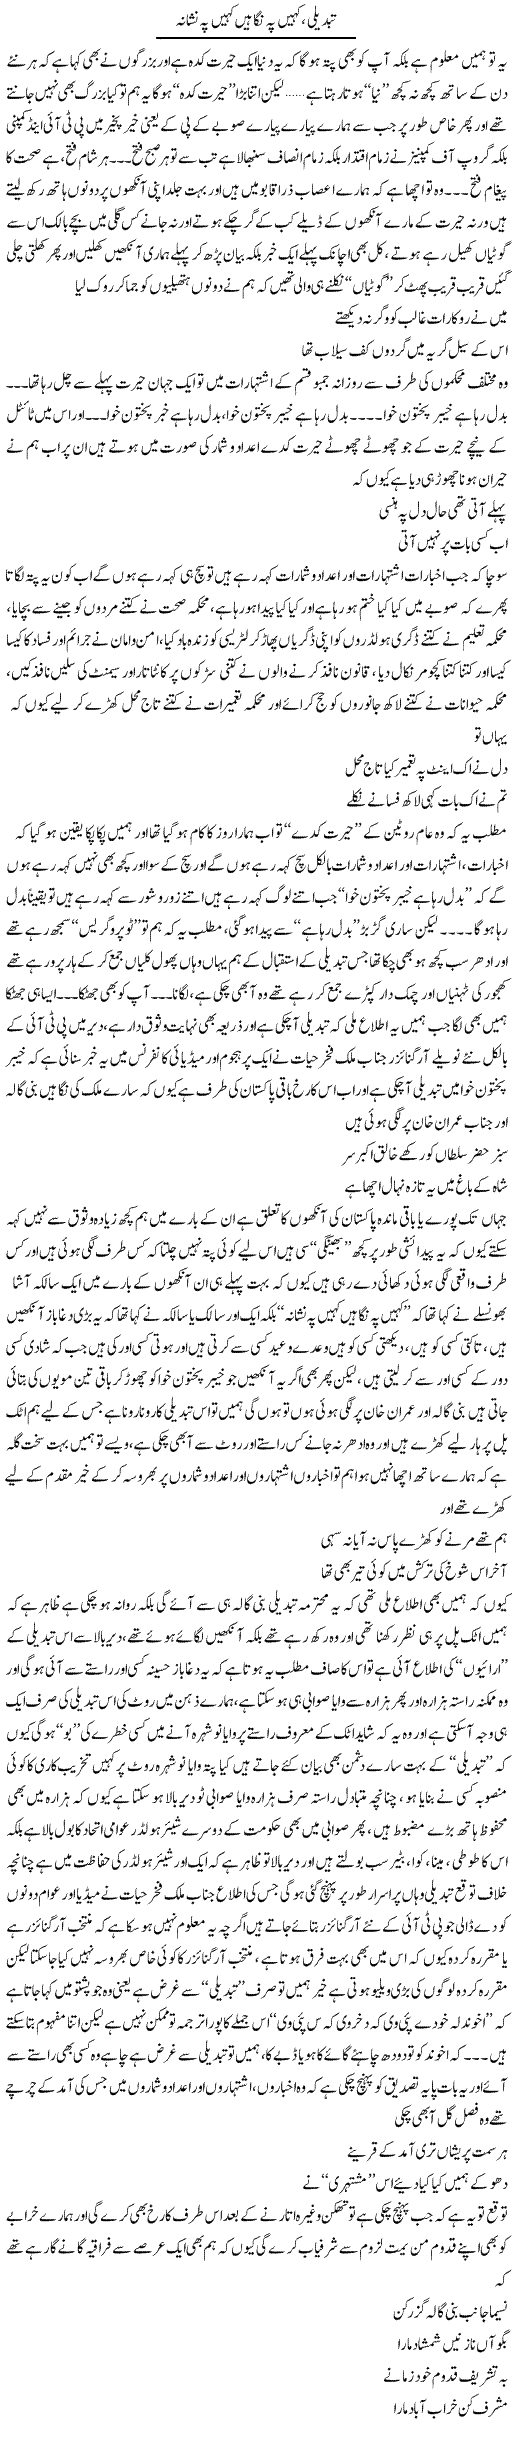 Tabdeeli, Kahin Pay Nigehain Kahin Pay Nishana | Saad Ullah Jan Barq | Daily Urdu Columns